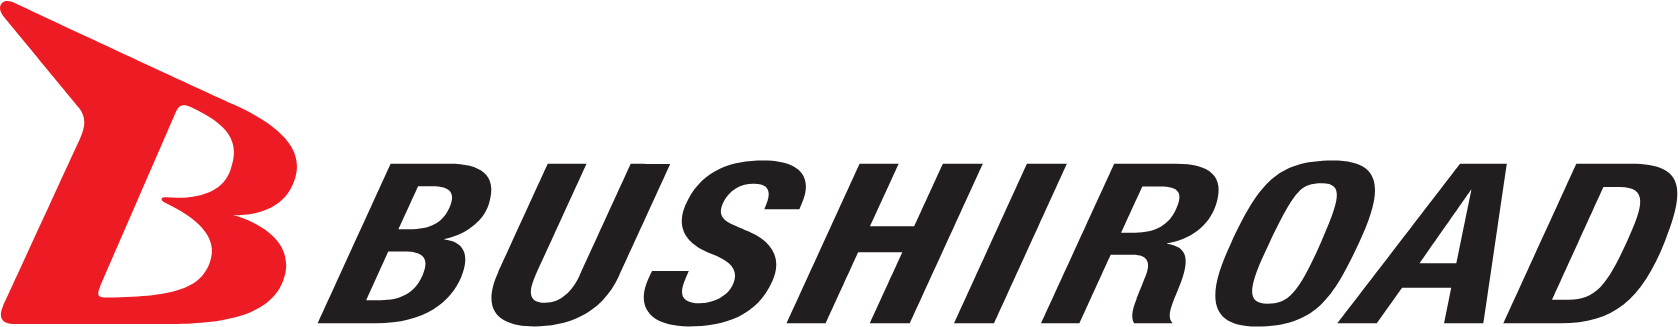 Bushiroad logo large (transparent PNG)